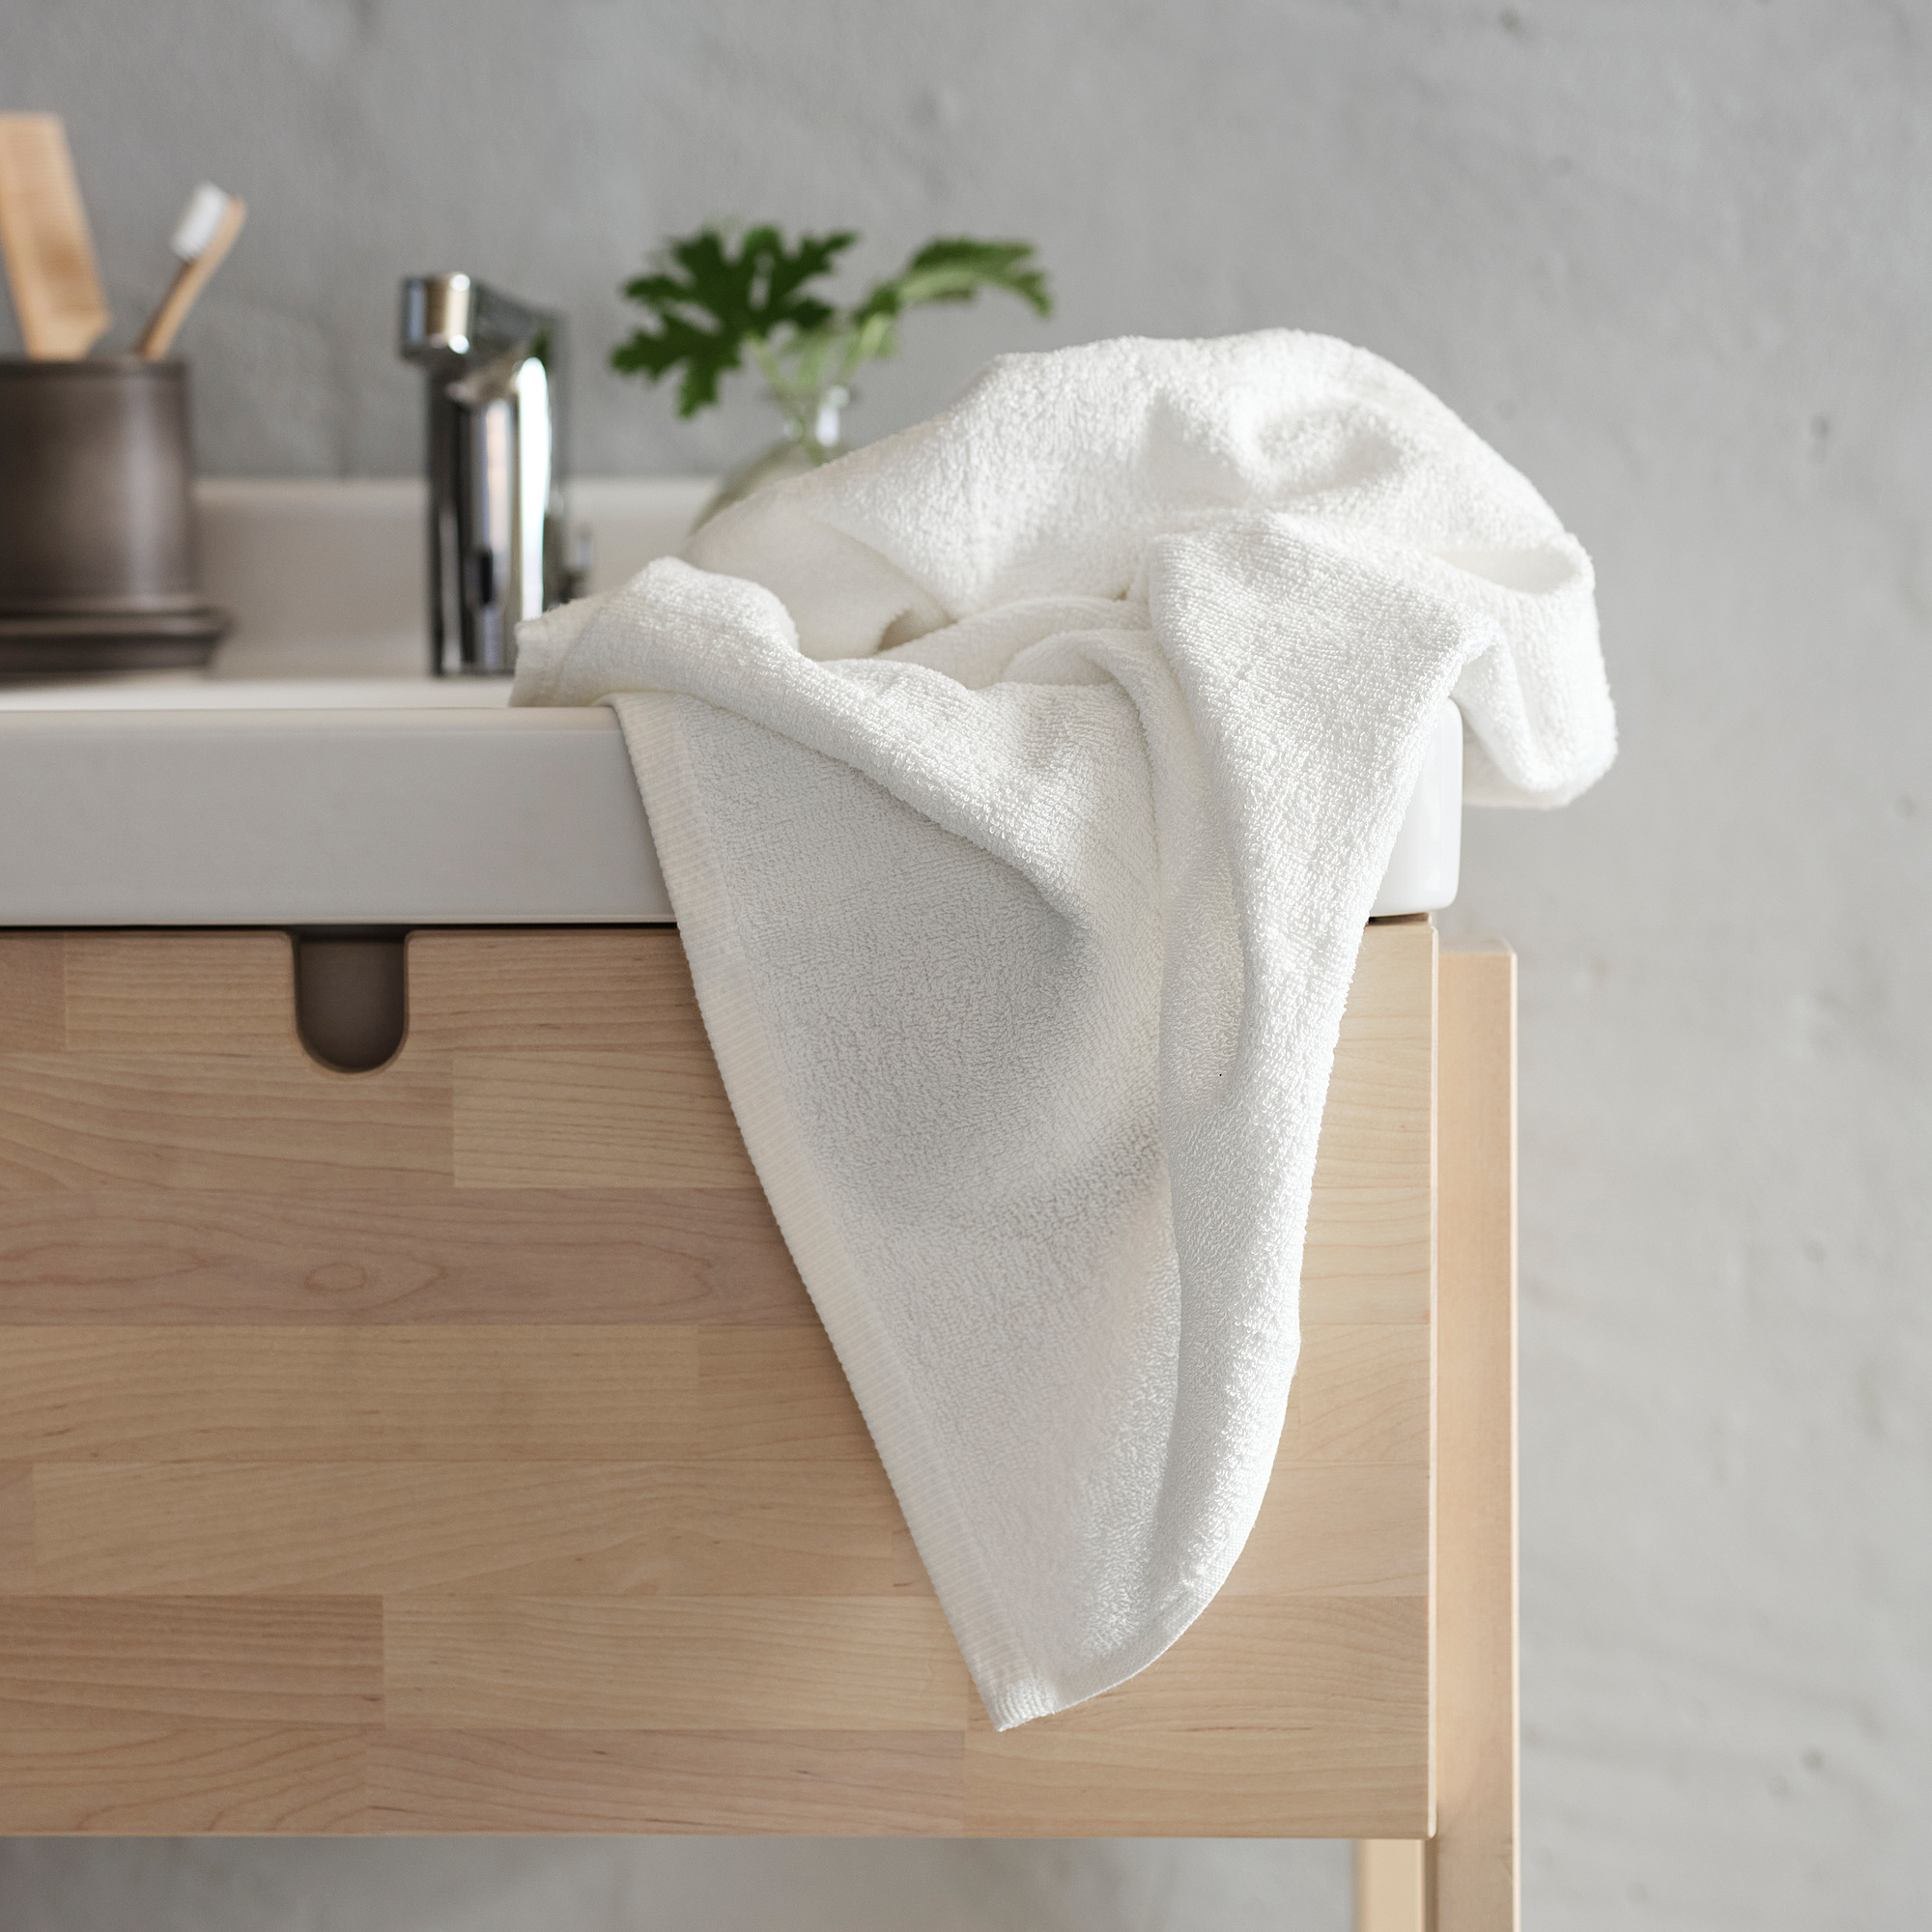 DIMFORSEN bath towel